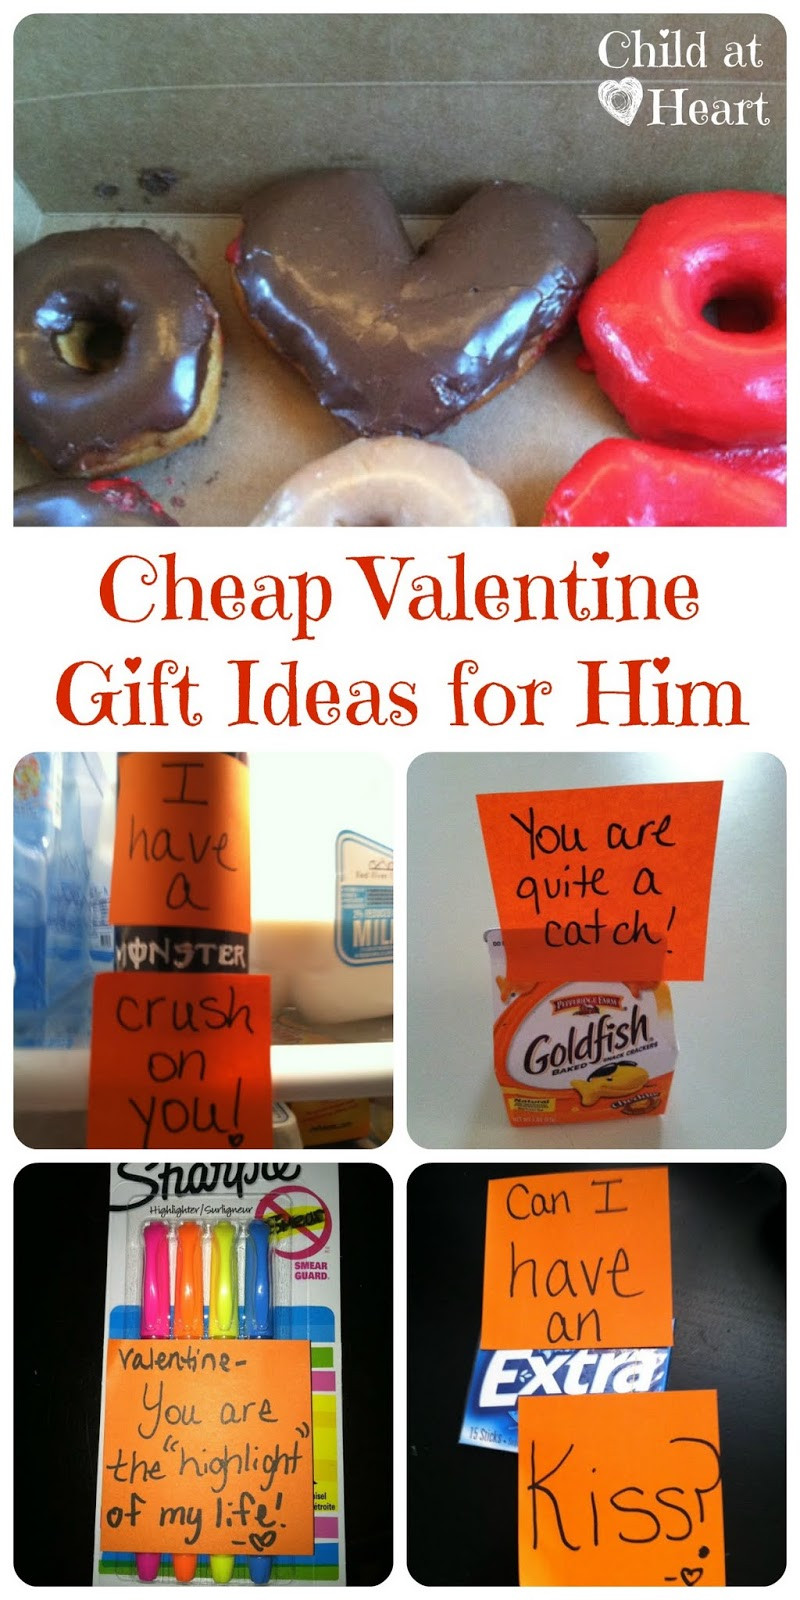 Creative Valentine Day Gift Ideas For Him
 Cheap Valentine Gift Ideas for Him Child at Heart Blog